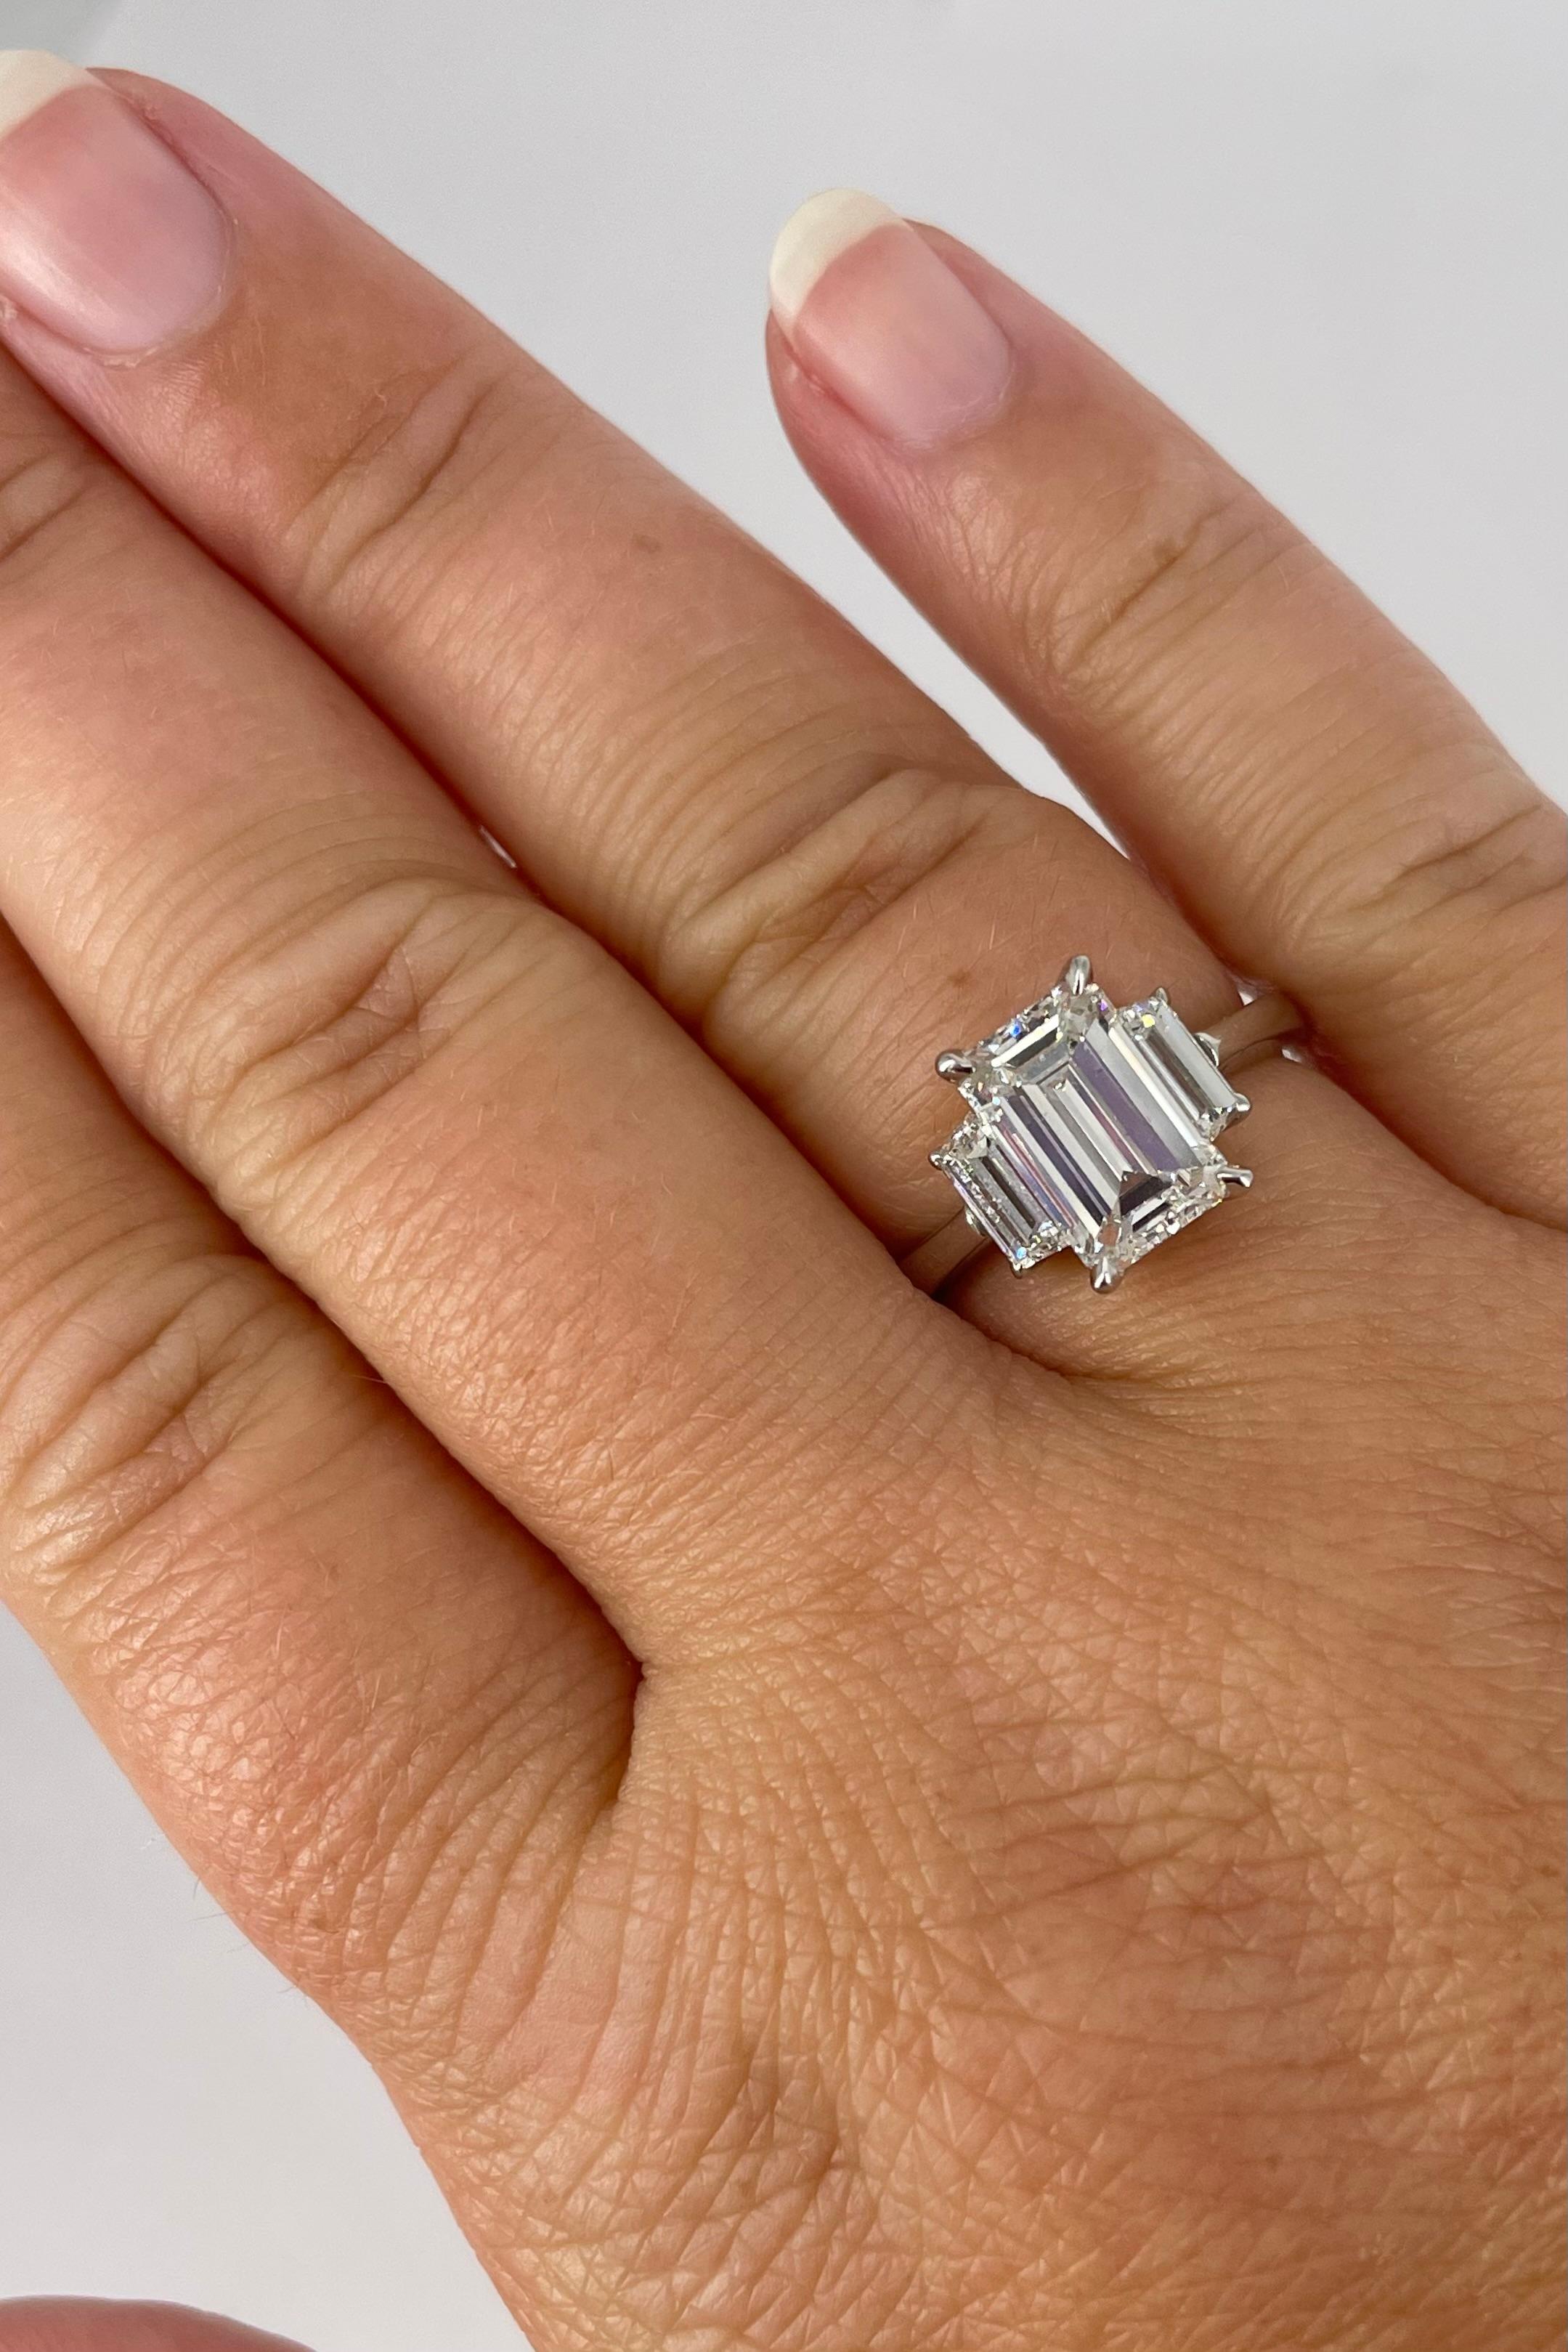 2 carat 3 stone emerald cut diamond ring